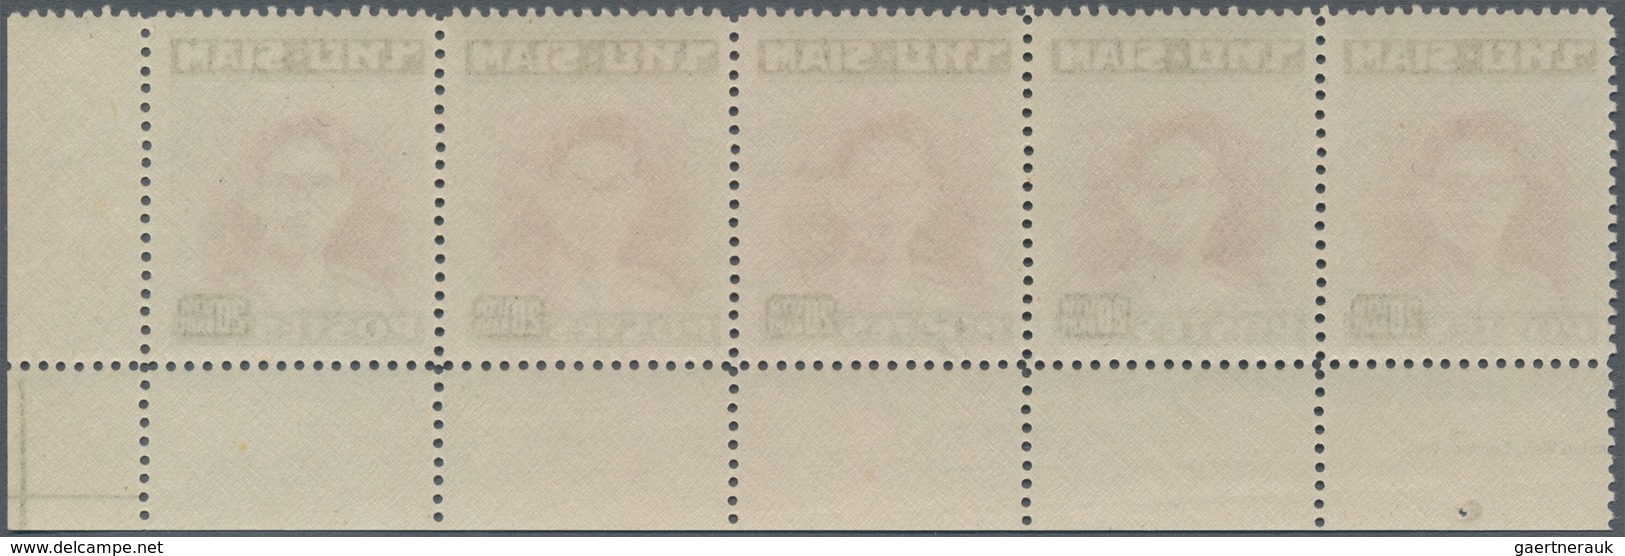 Thailand: 1948, King 20 B., A Bottom Right Corner Margin Horizontal Strip-5 With Part-imprint, Mint - Thailand